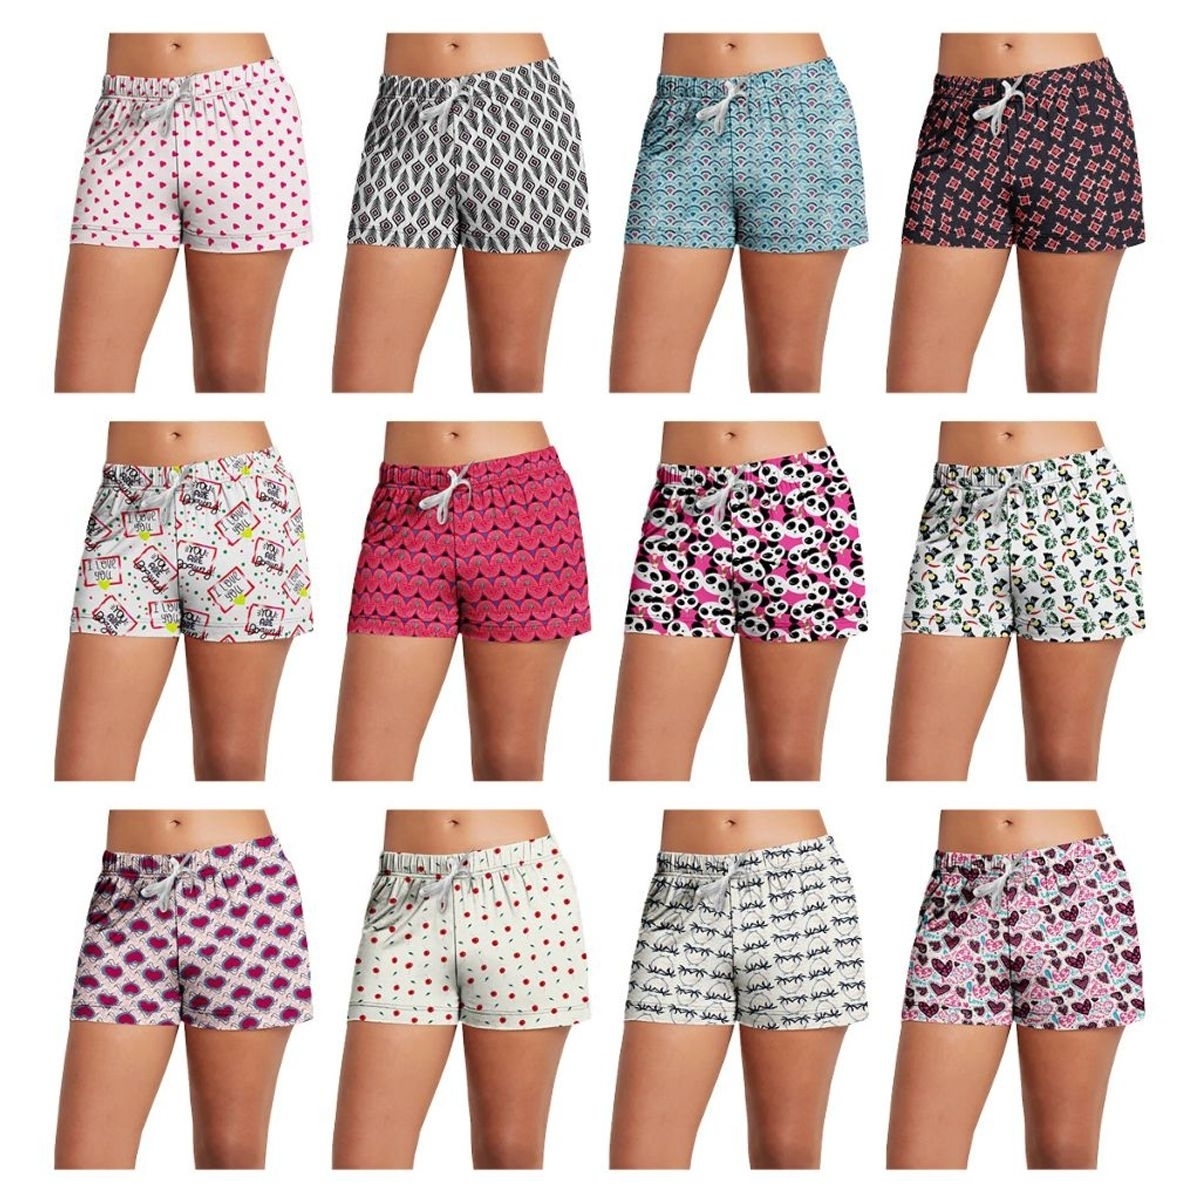 2-Pack: Women's Super-Soft Lightweight Fun Printed Comfy Lounge Bottom Pajama Shorts W/ Drawstring - X-large, Love